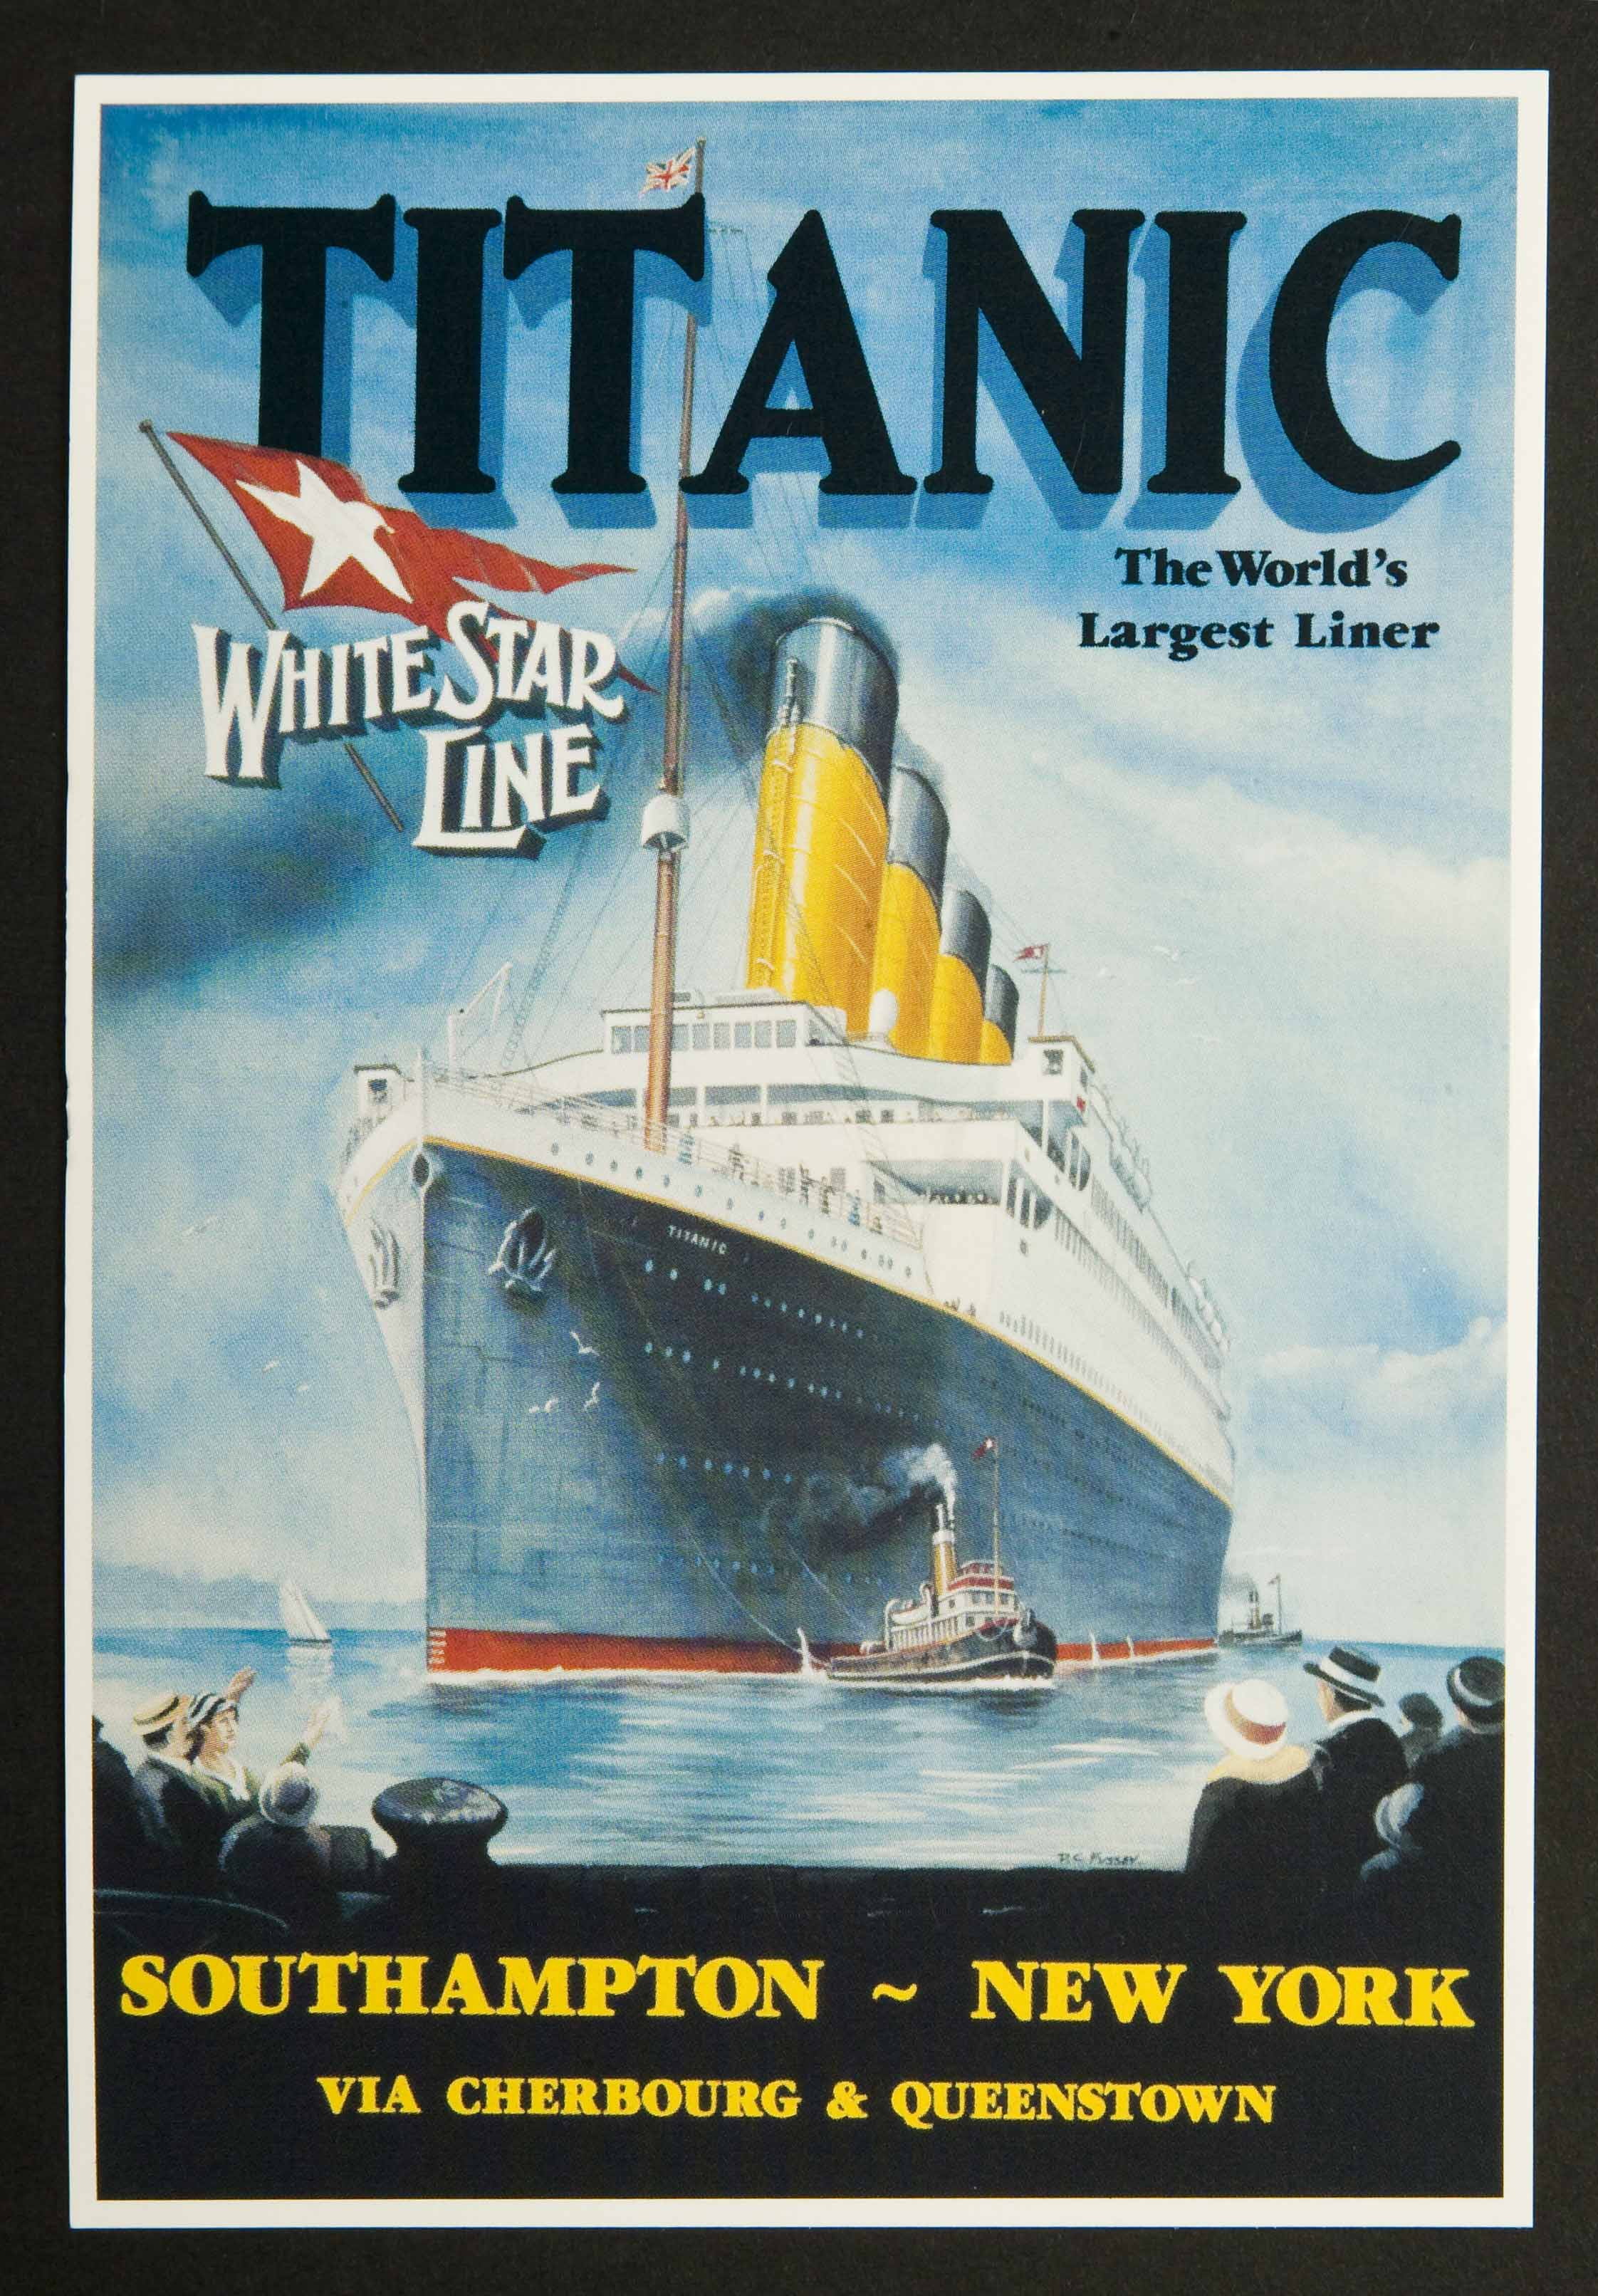 Titanic - The World's Largest Liner Postcards (6)